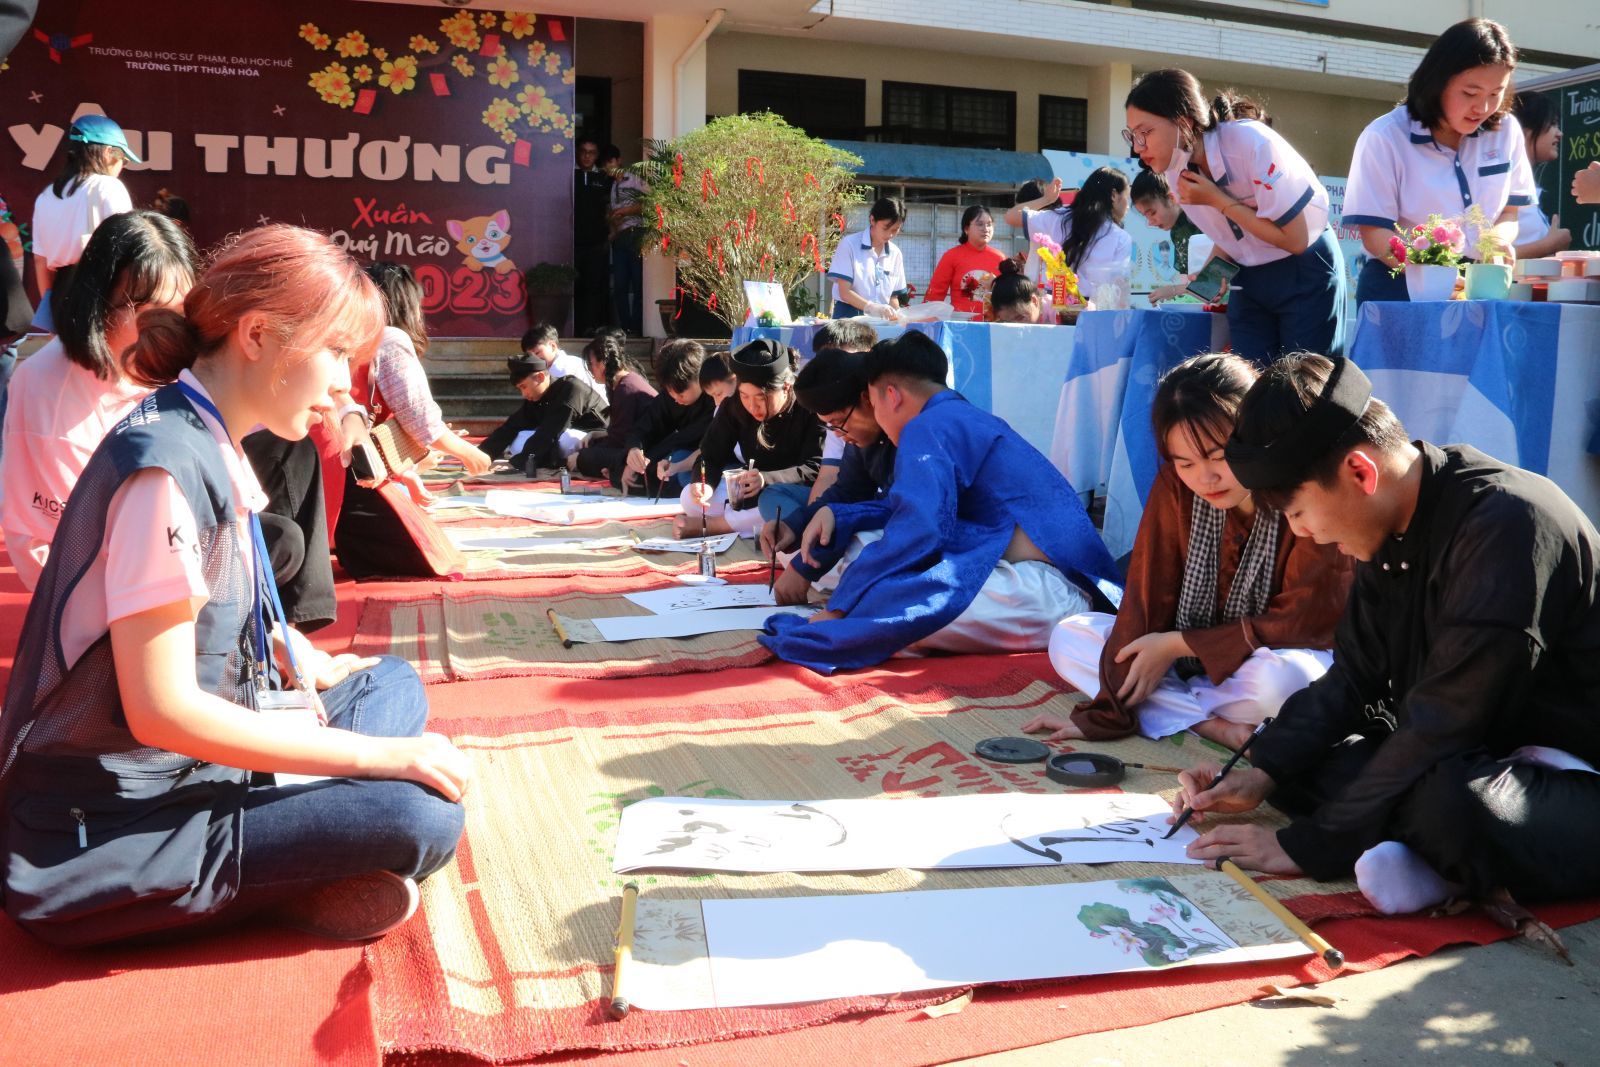 Korean students watching calligraphers writing calligraphy